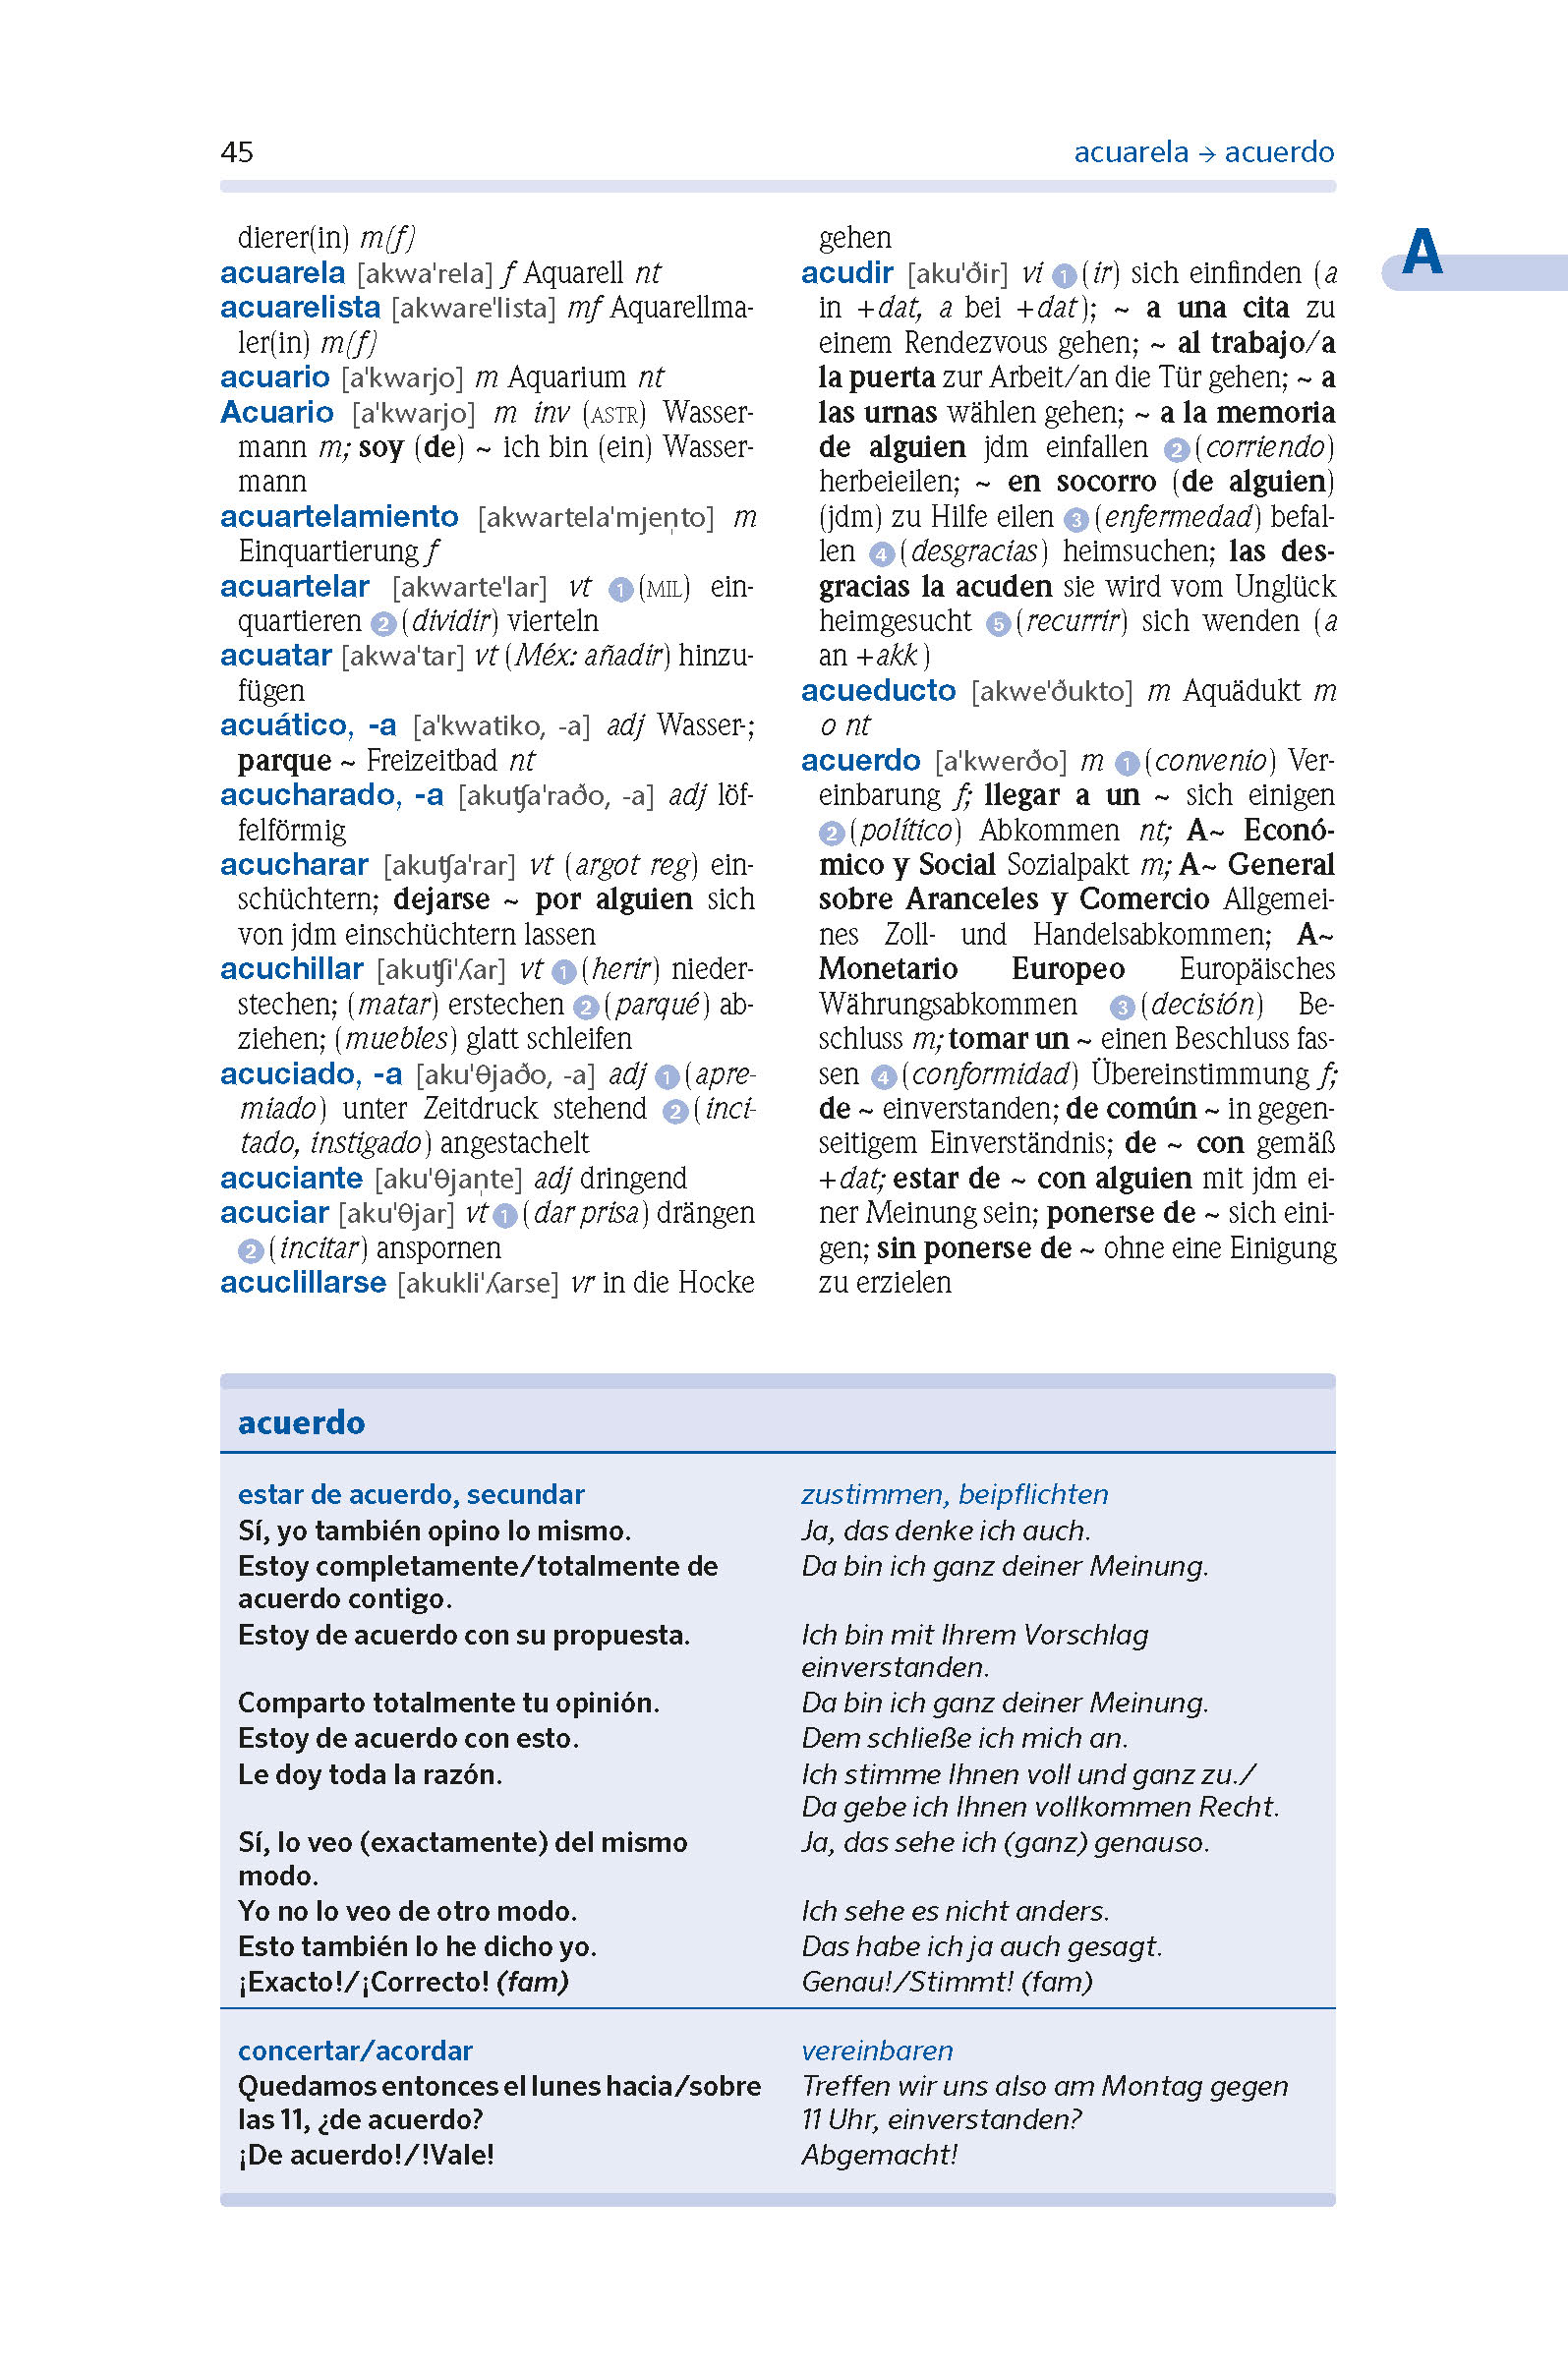 PONS Kompaktwörterbuch Plus Spanisch